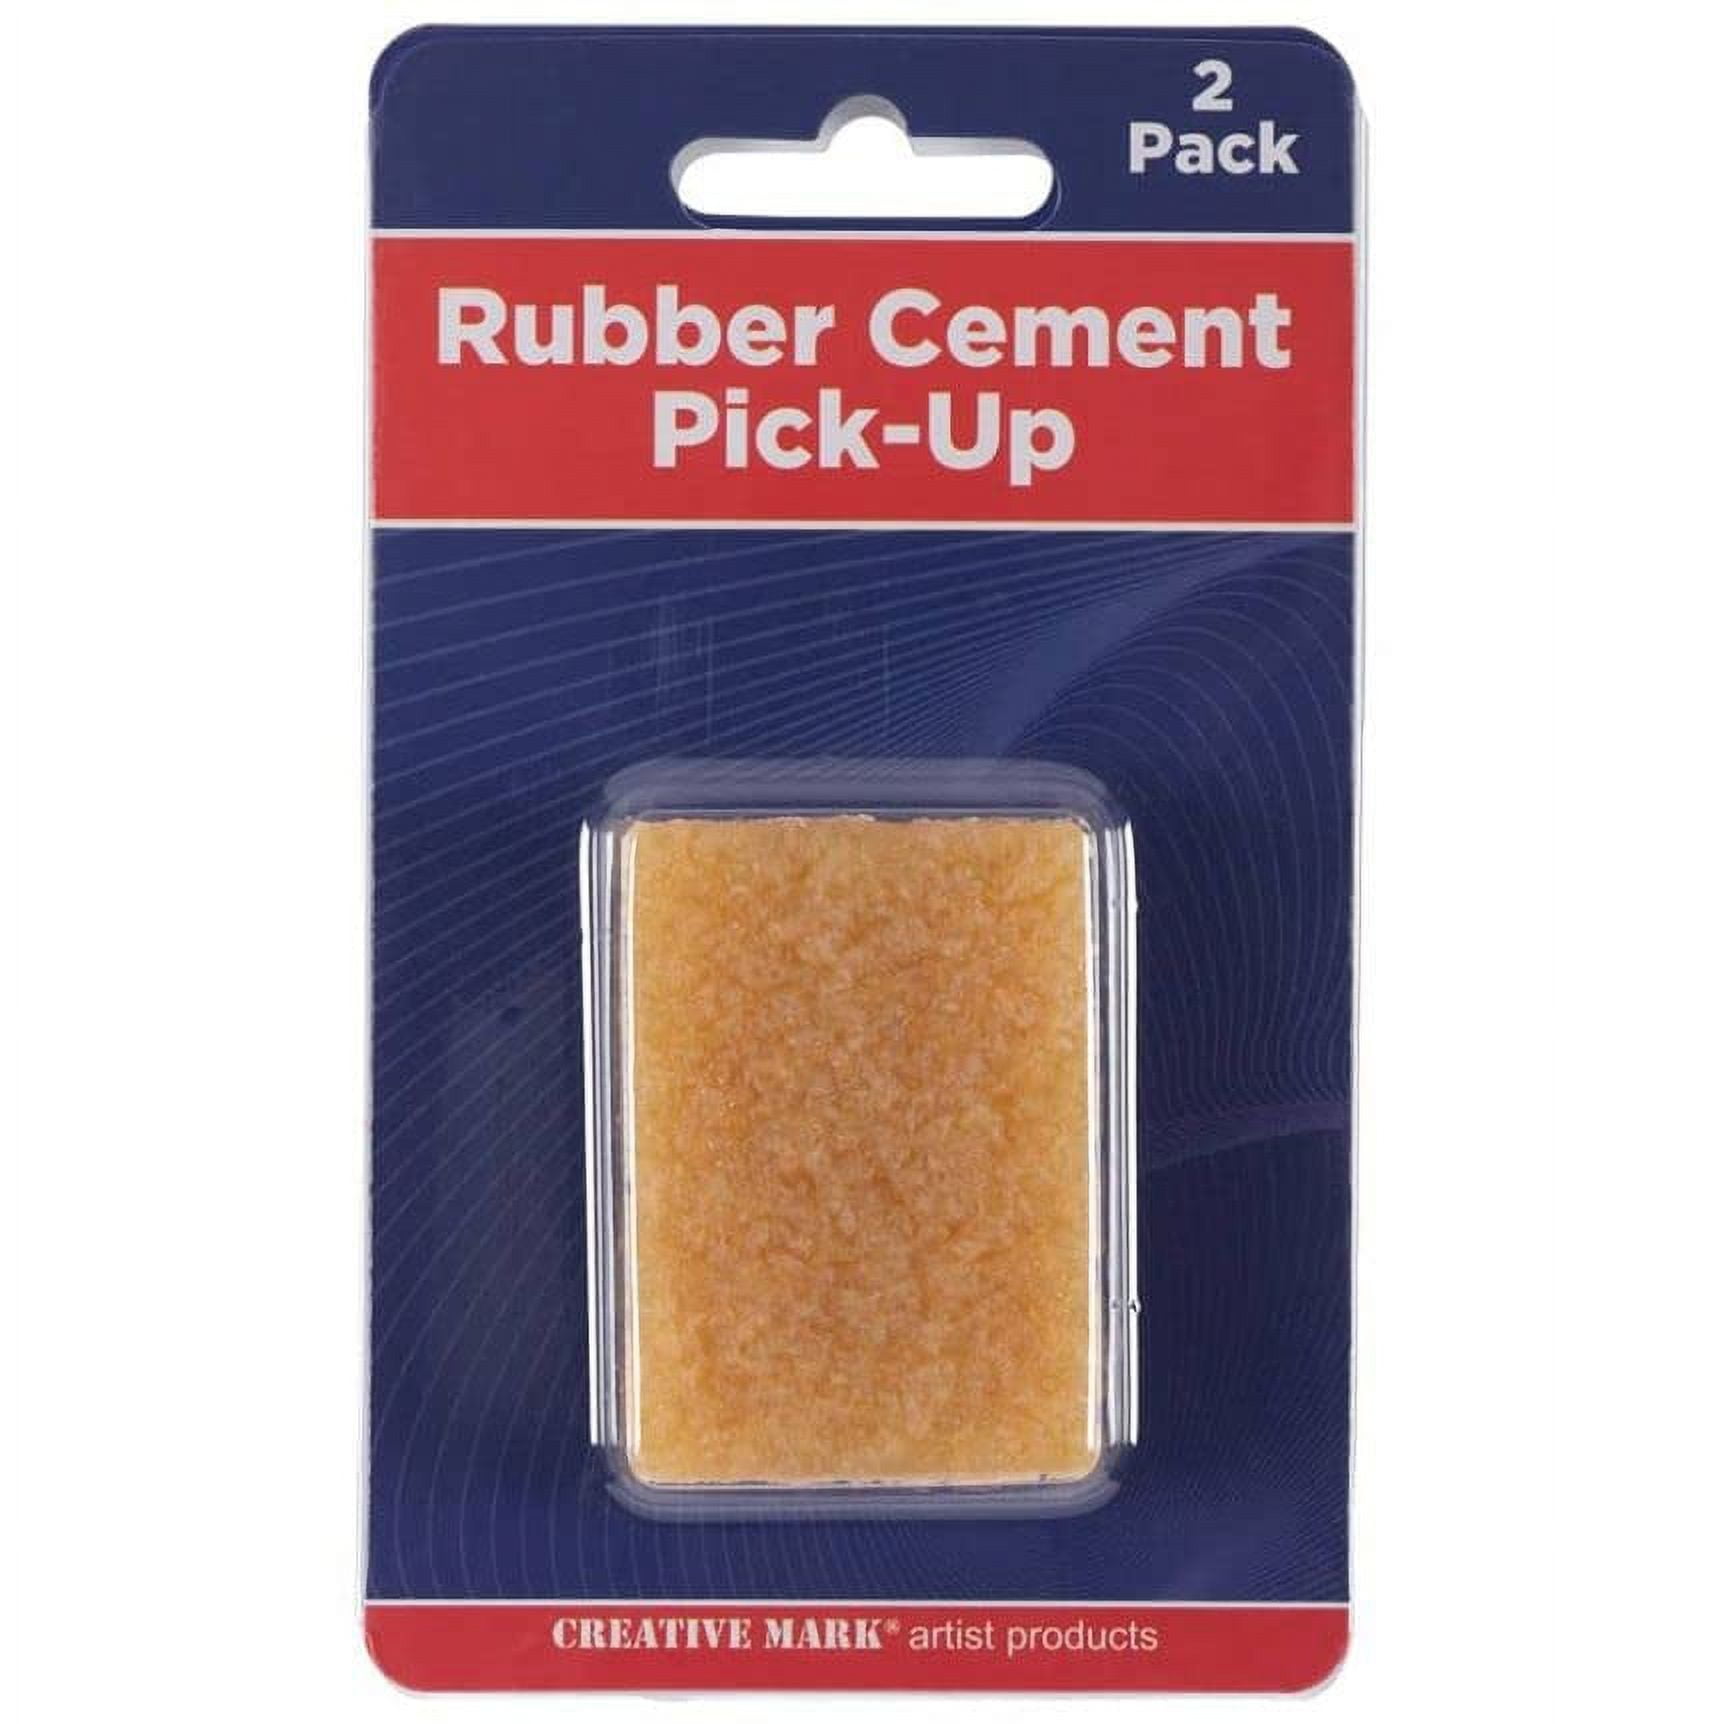 10PCS Rubber Cement Pickup Eraser Erasers Pick- Up Eraser Glue Eraser